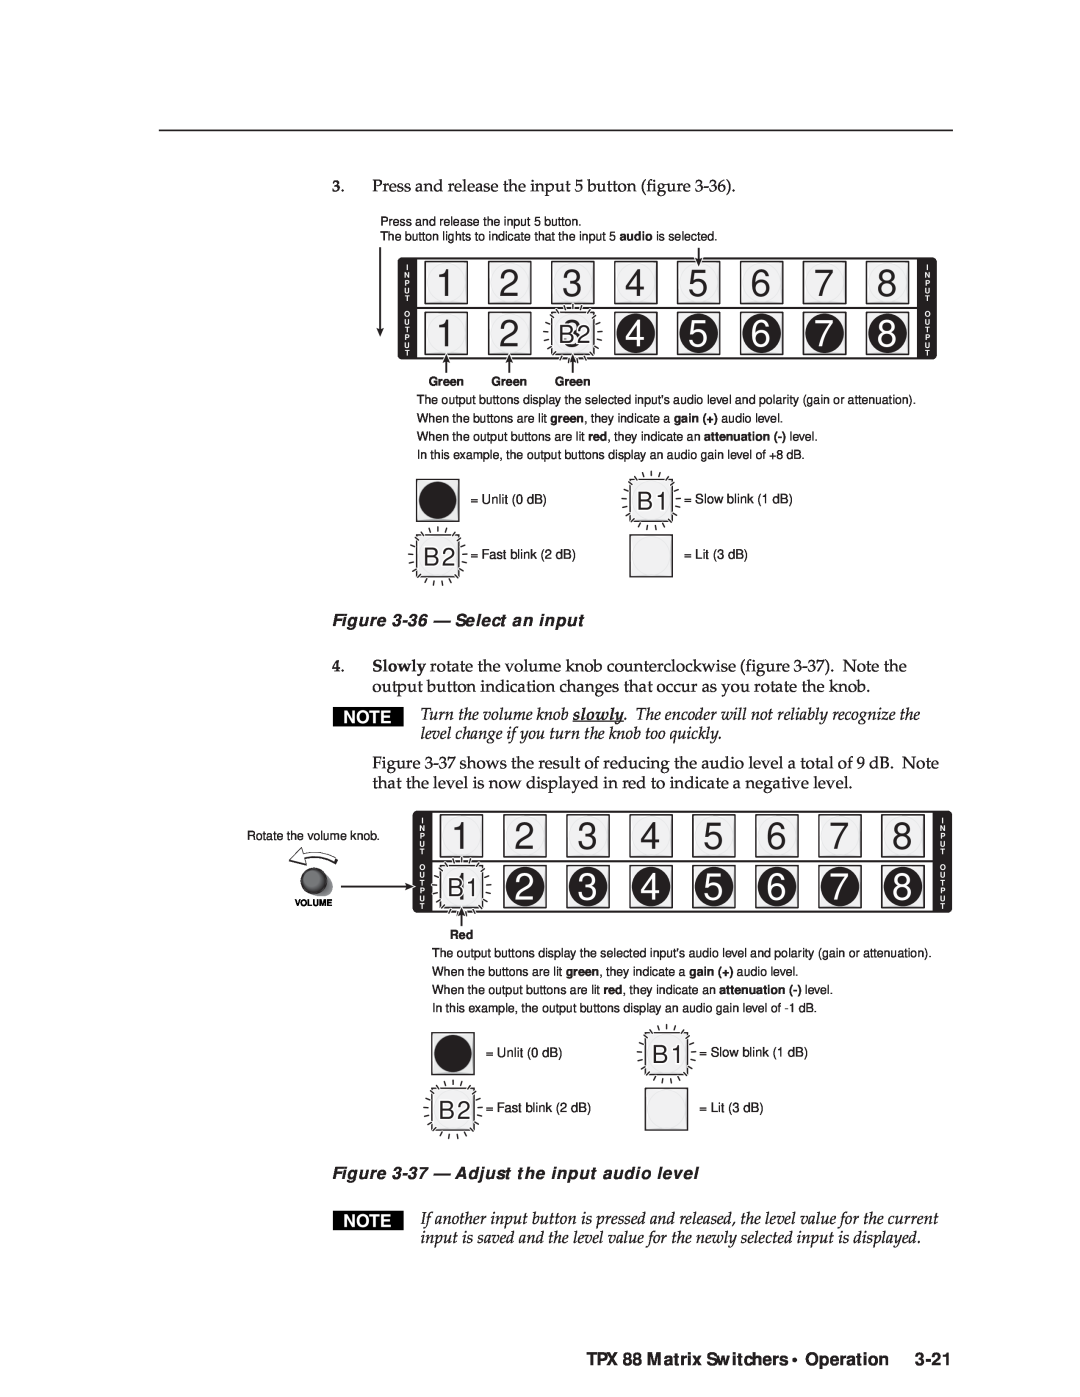 Extron electronic TPX 88 A manual B1 2 3 4 5 6 7, 36 - Select an input, 37 - Adjust the input audio level, Volumet 